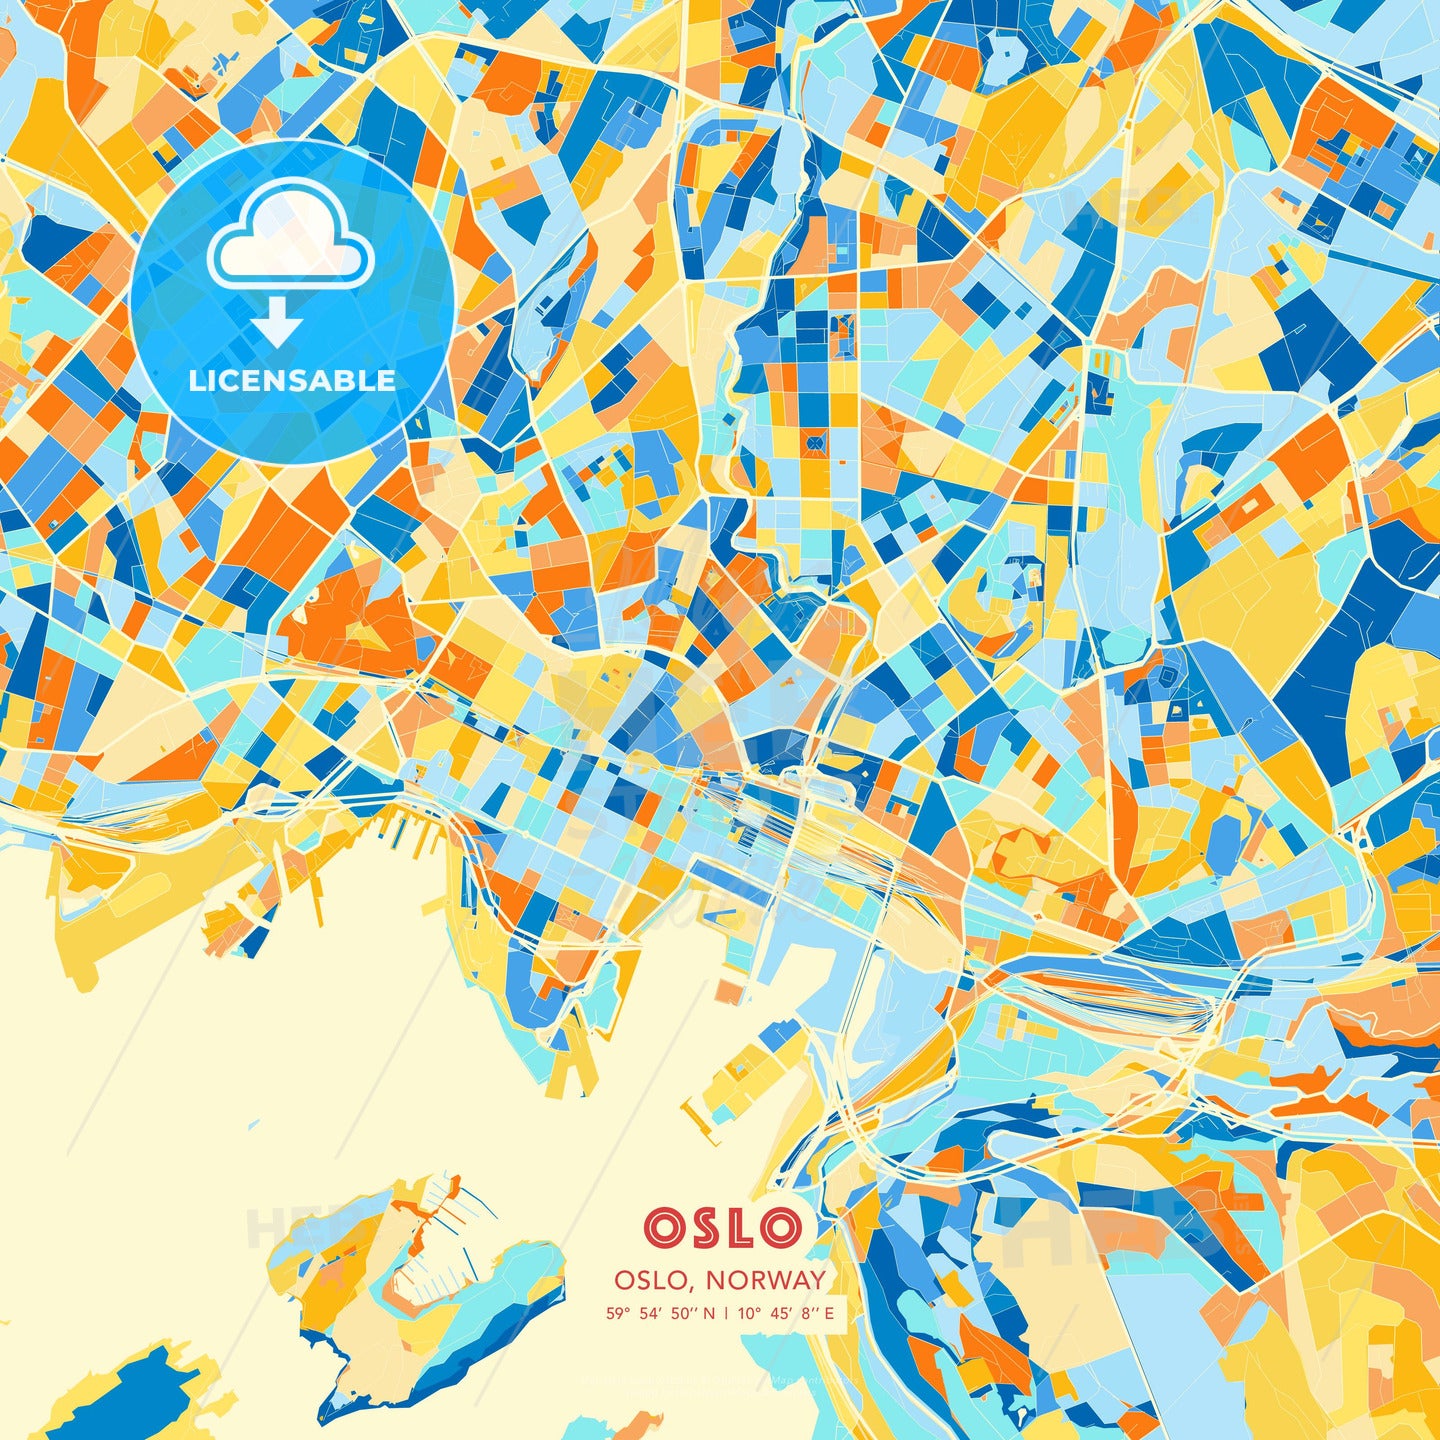 Oslo, Oslo, Norway, map - HEBSTREITS Sketches